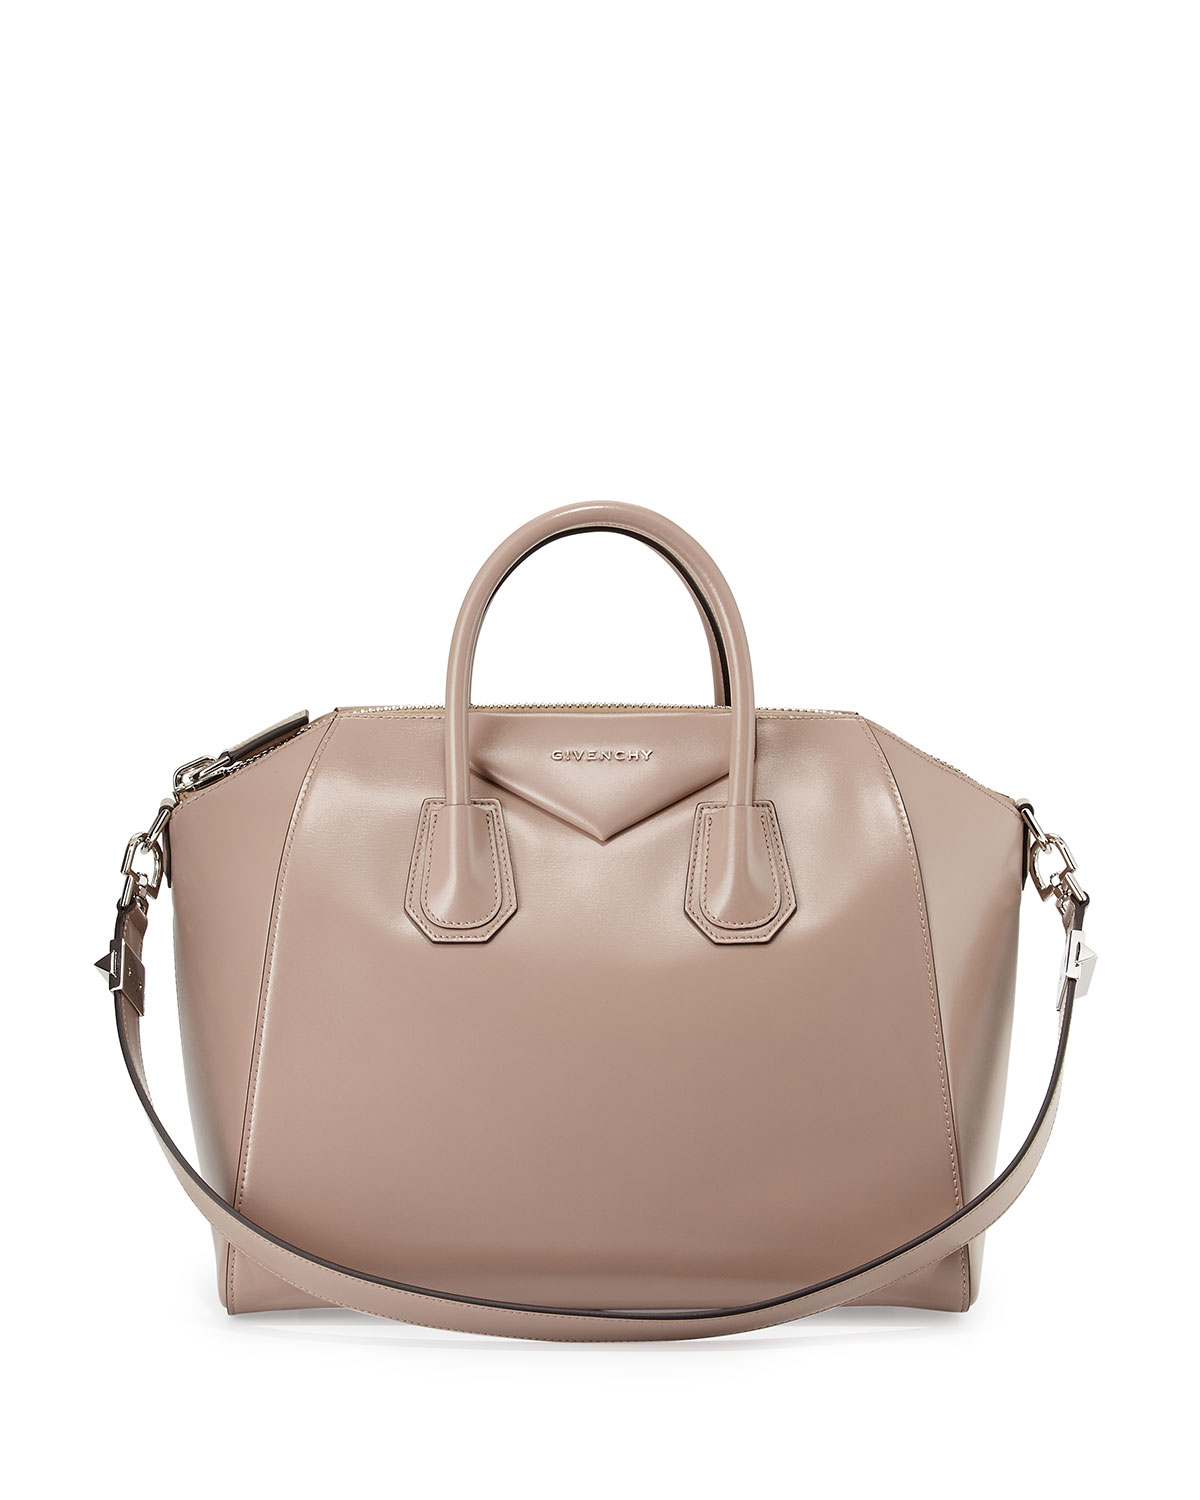 Givenchy Antigona Medium Leather Satchel Bag in Natural | Lyst